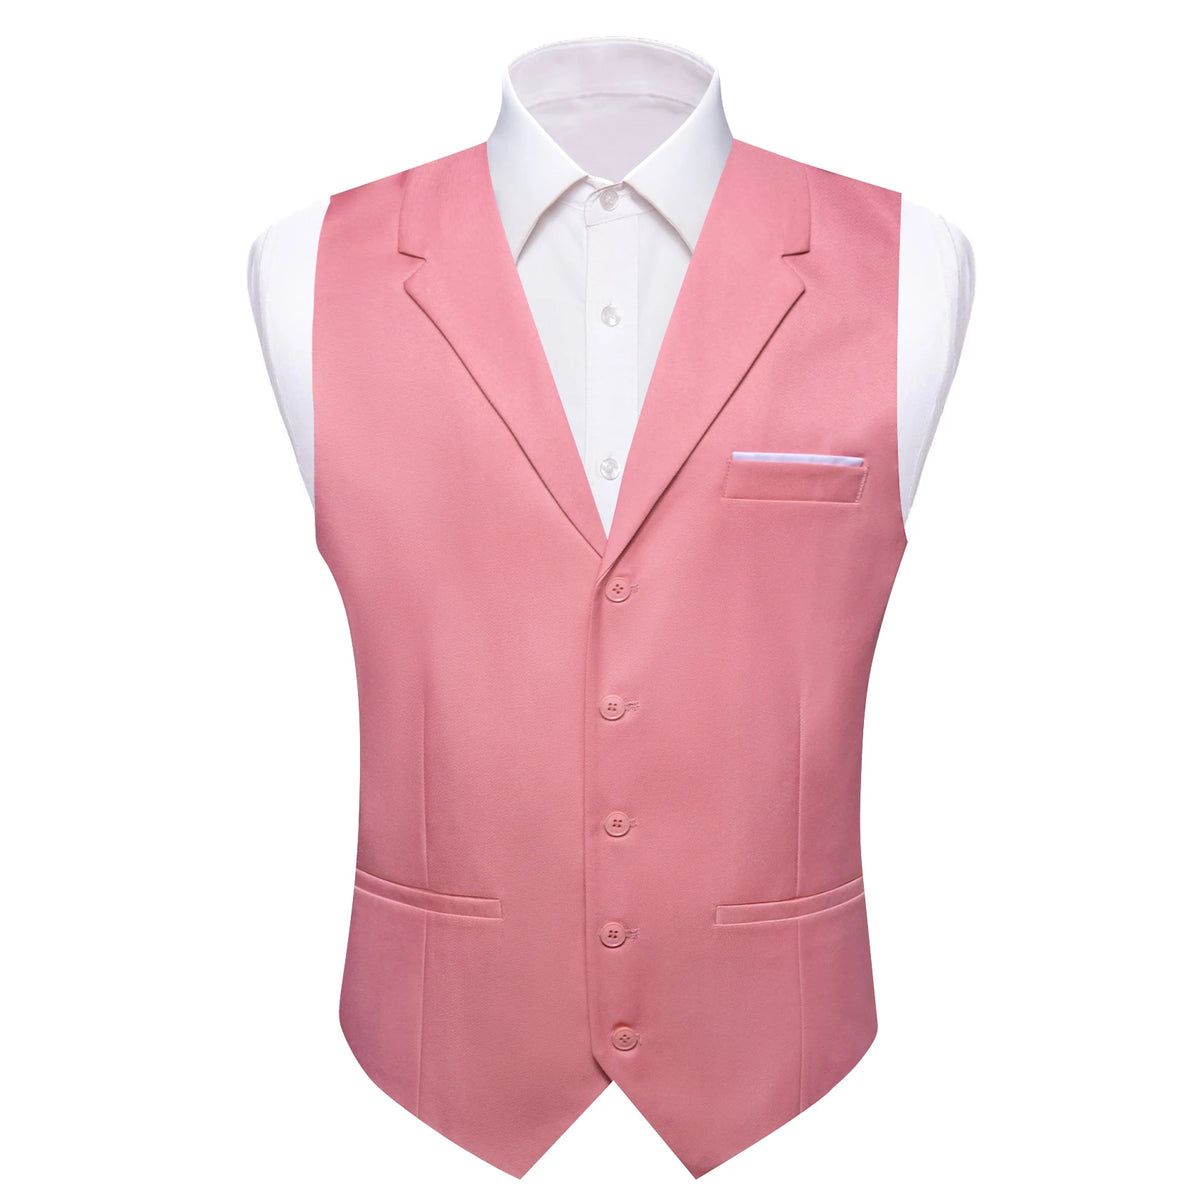 a pink vest on a mannequin mannequin mannequin manne